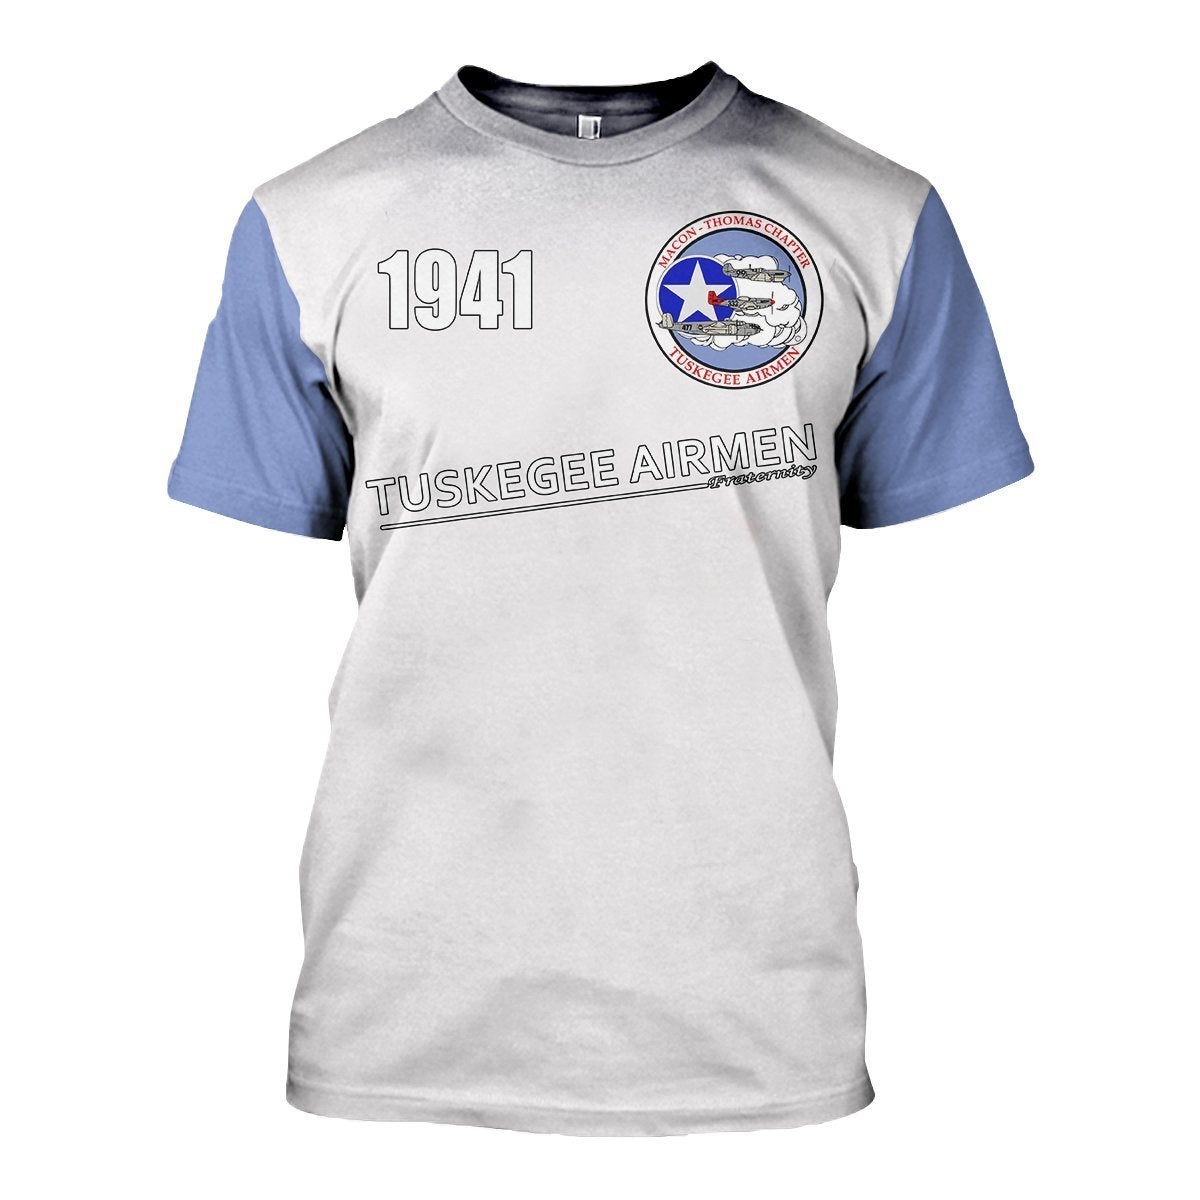 wonder-print-shop-t-shirt-tuskegee-airmen-tee